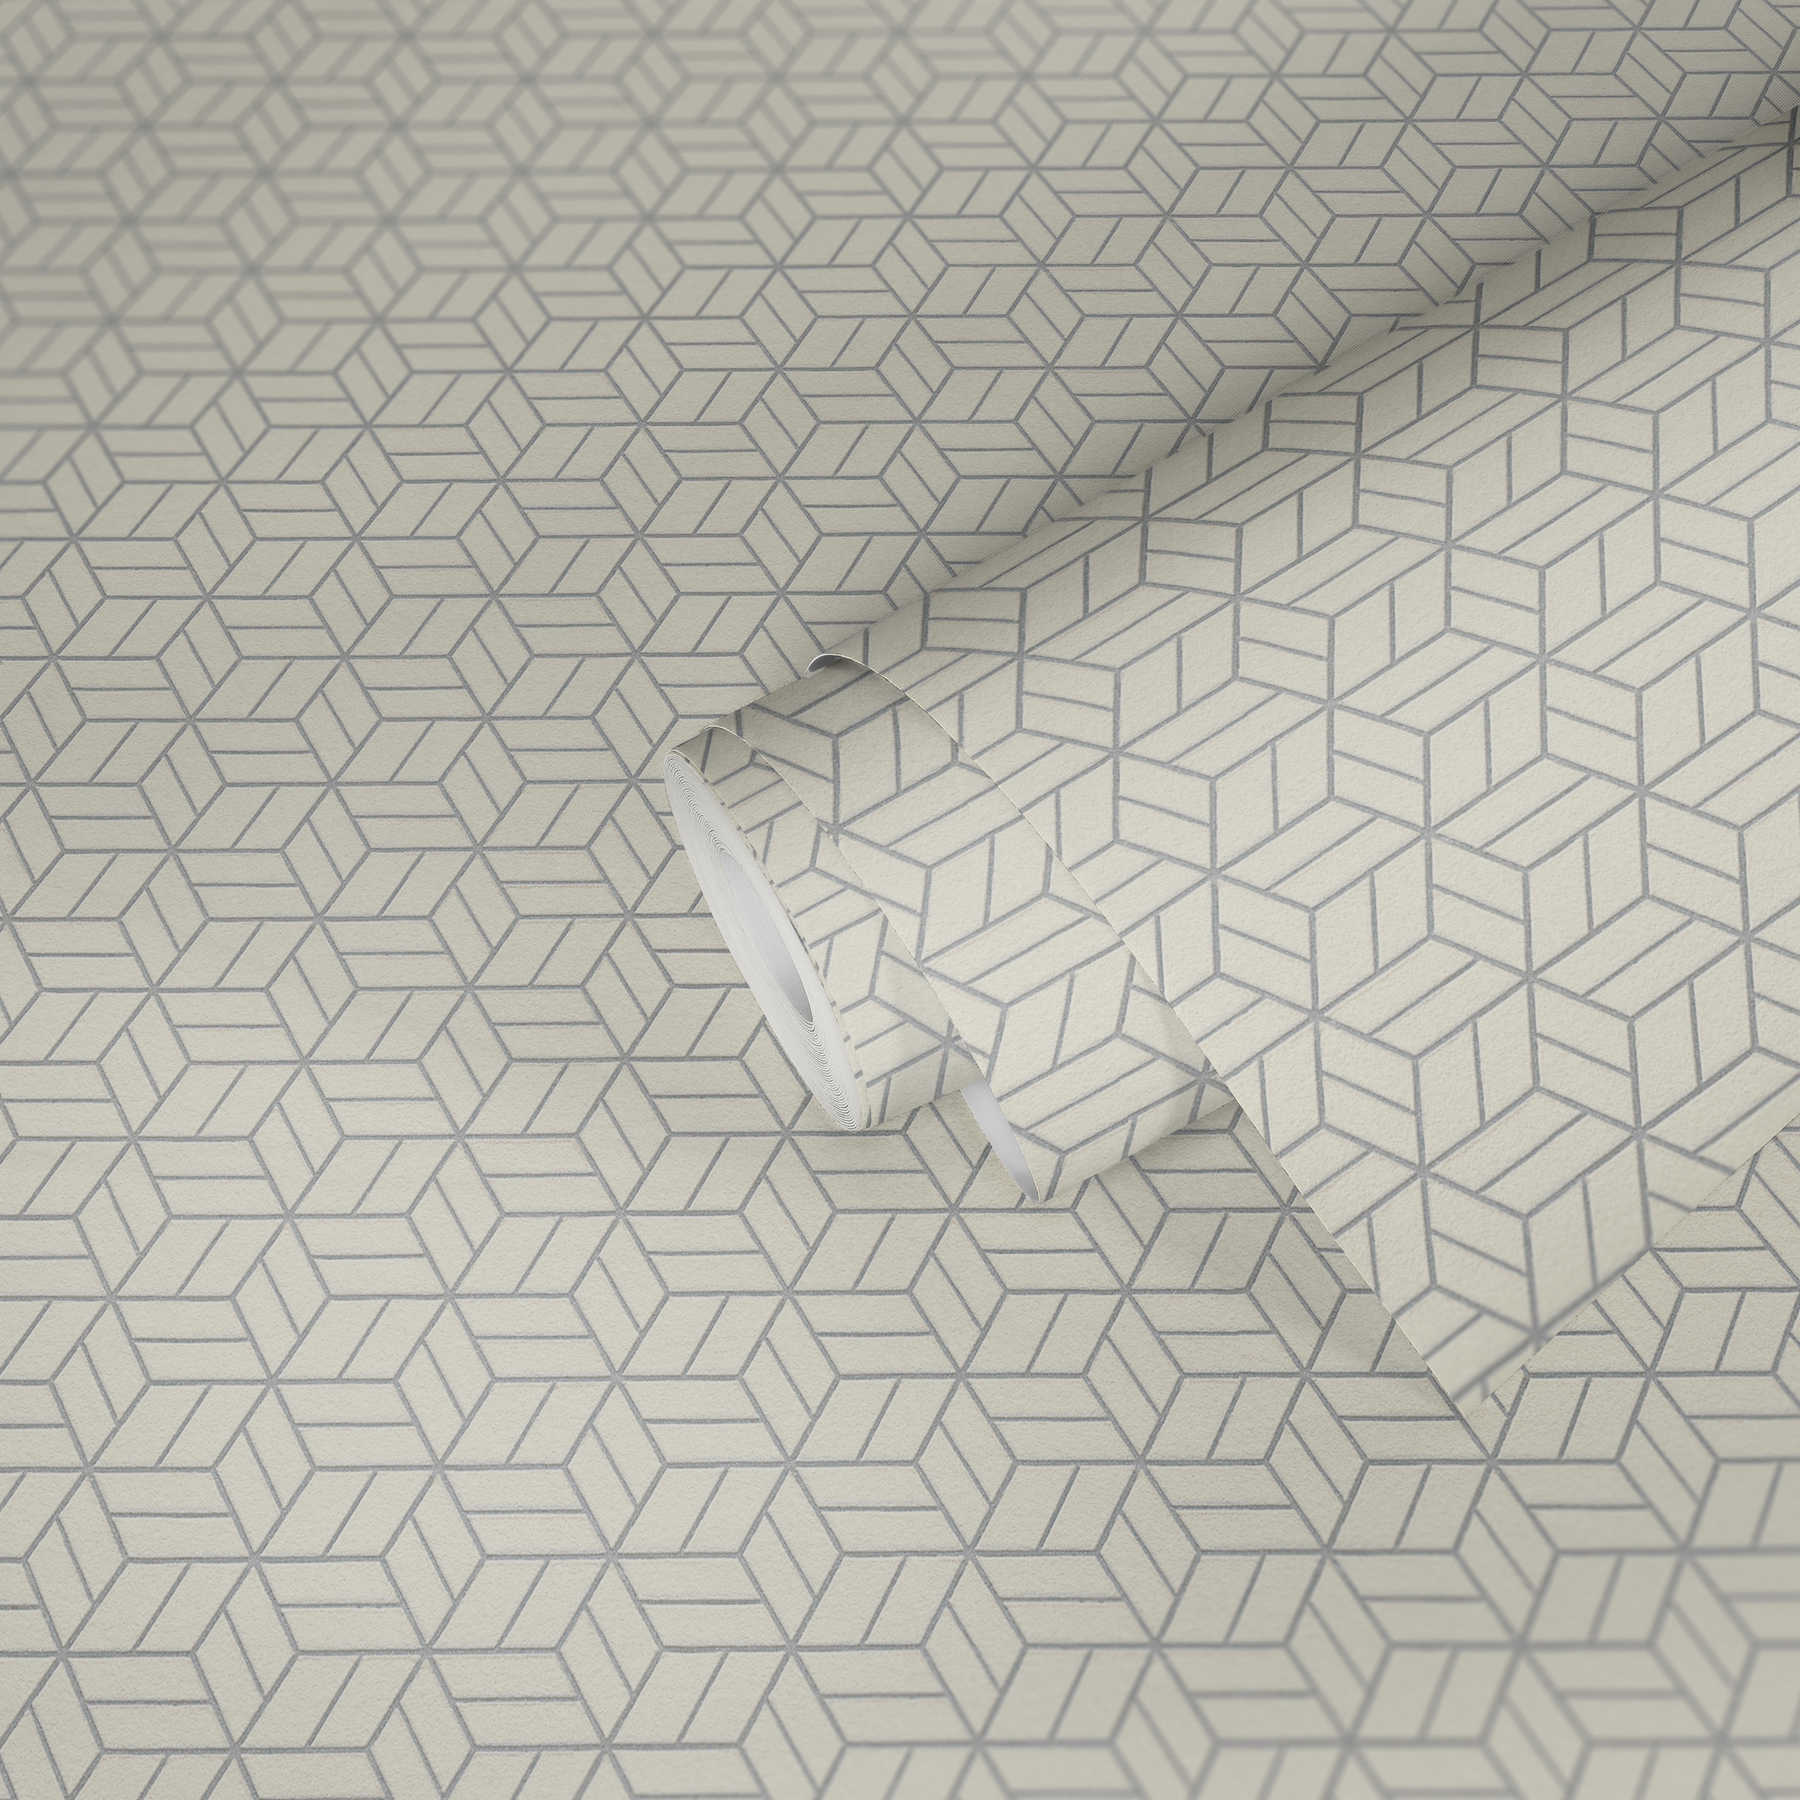             Wallpaper geometric pattern & glitter effect - silver, grey, white
        